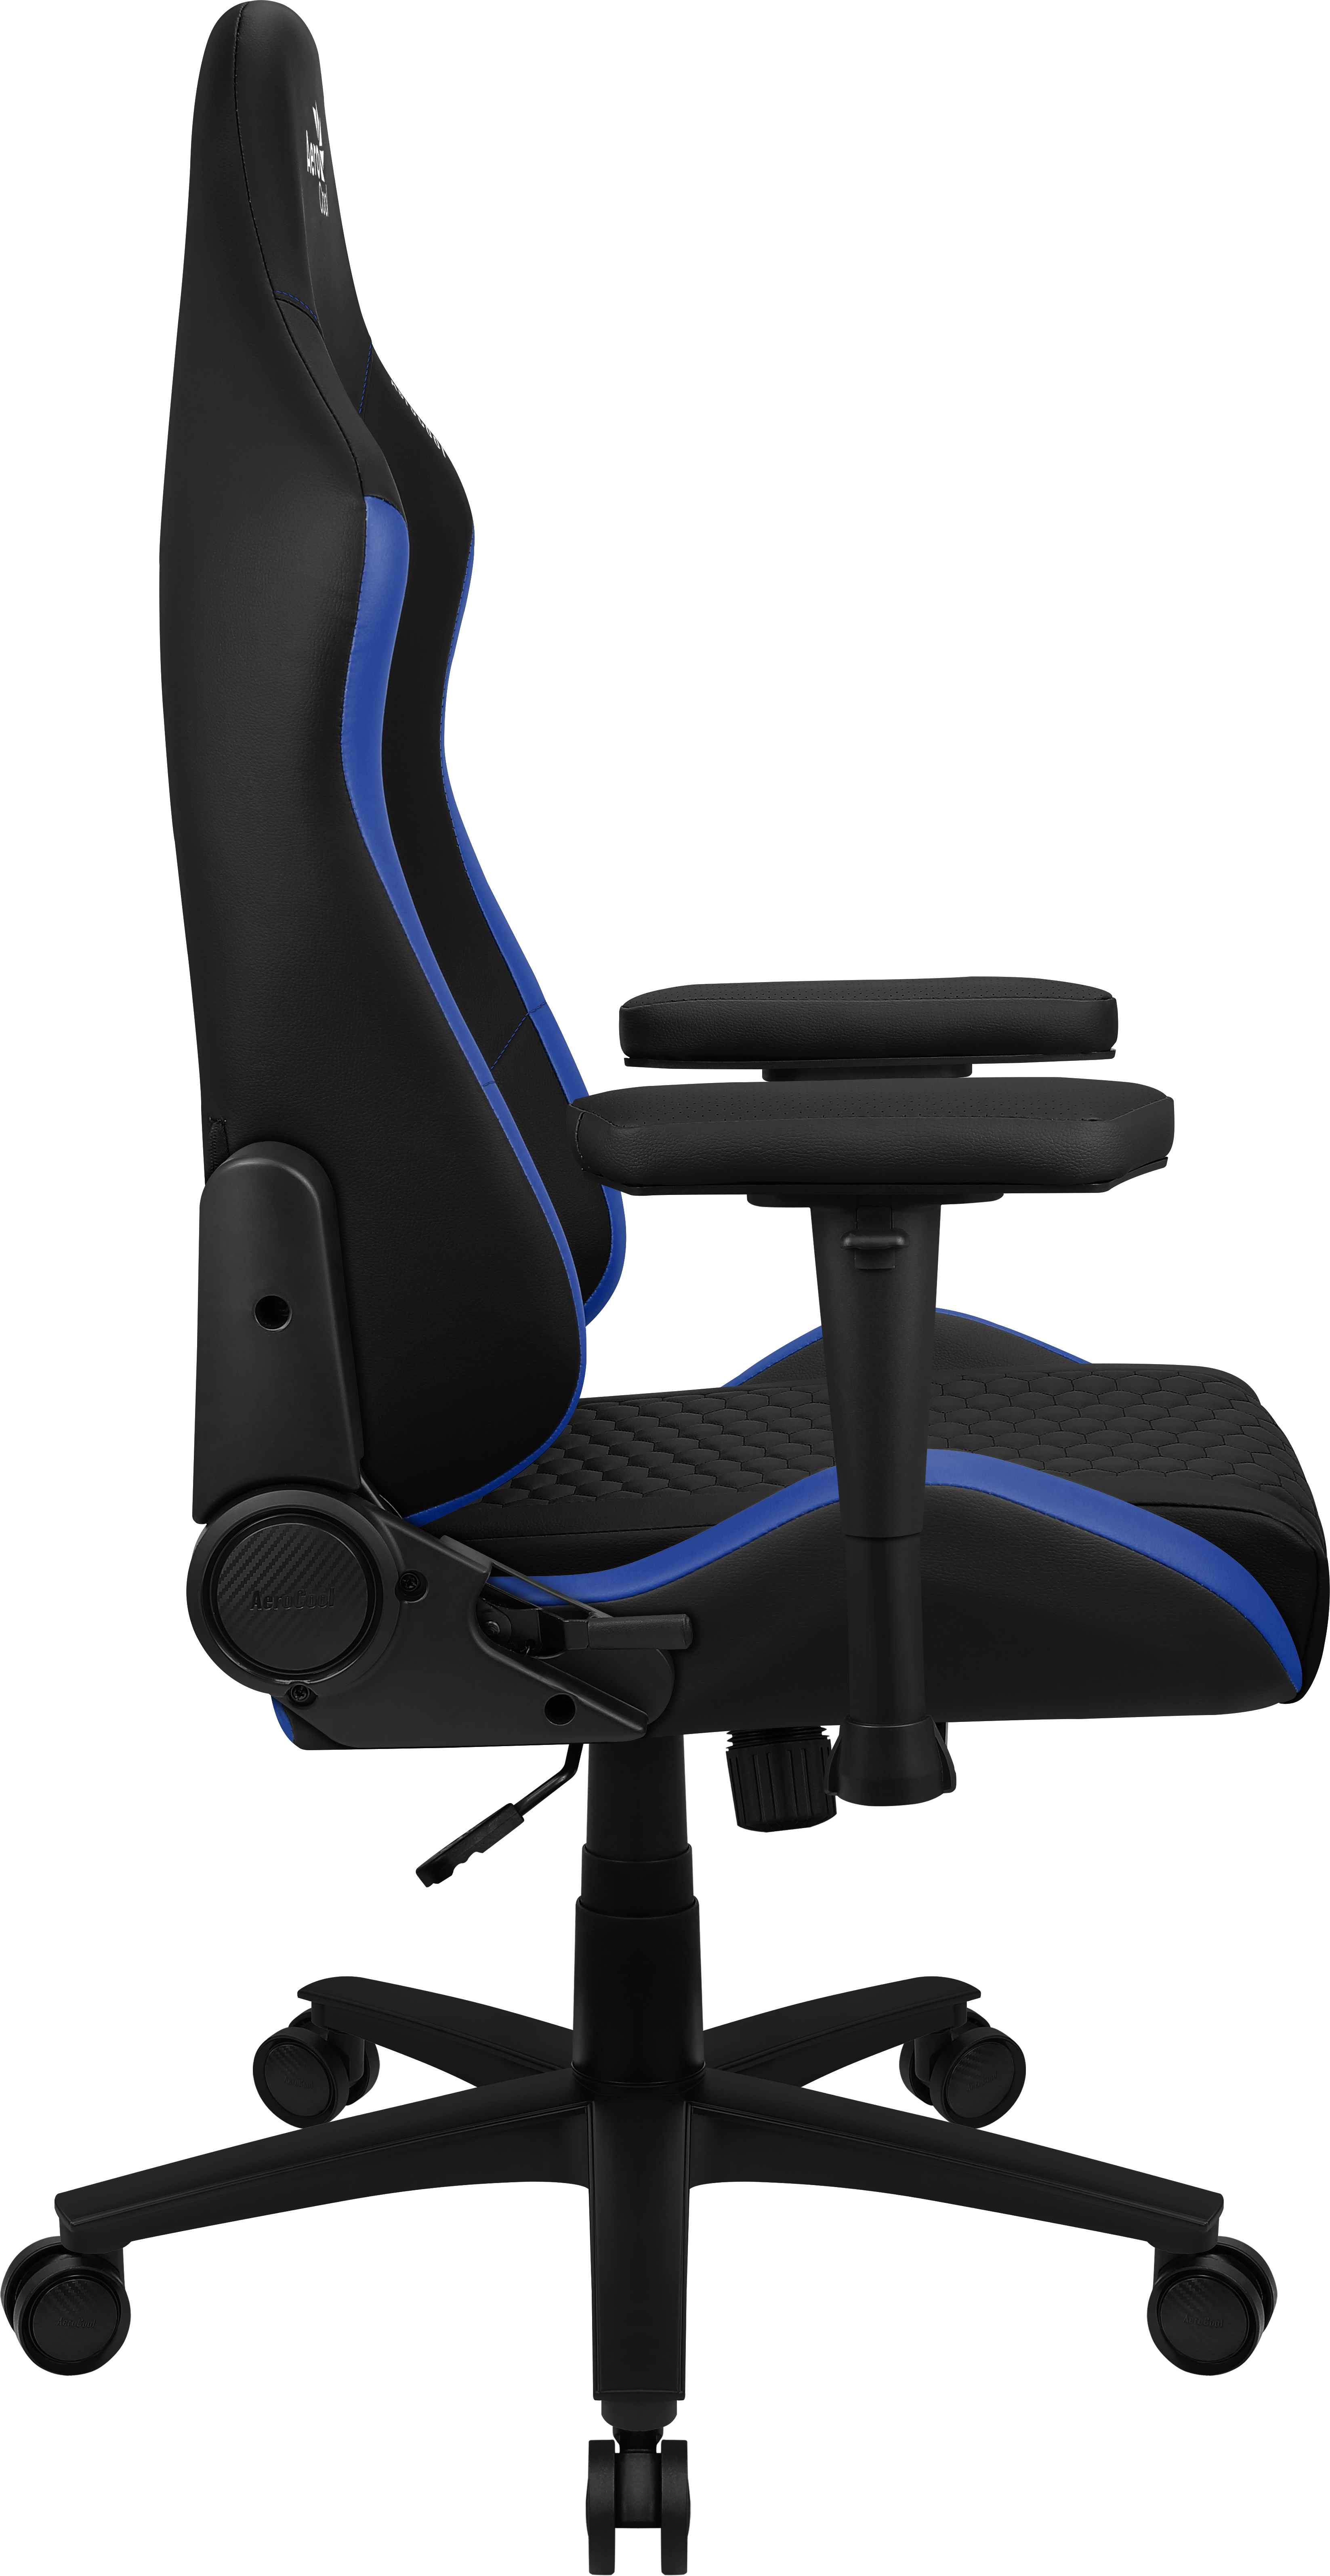 Aerocool - Aerocool Crown Nobility Series Gaming Chair - Black/Blue